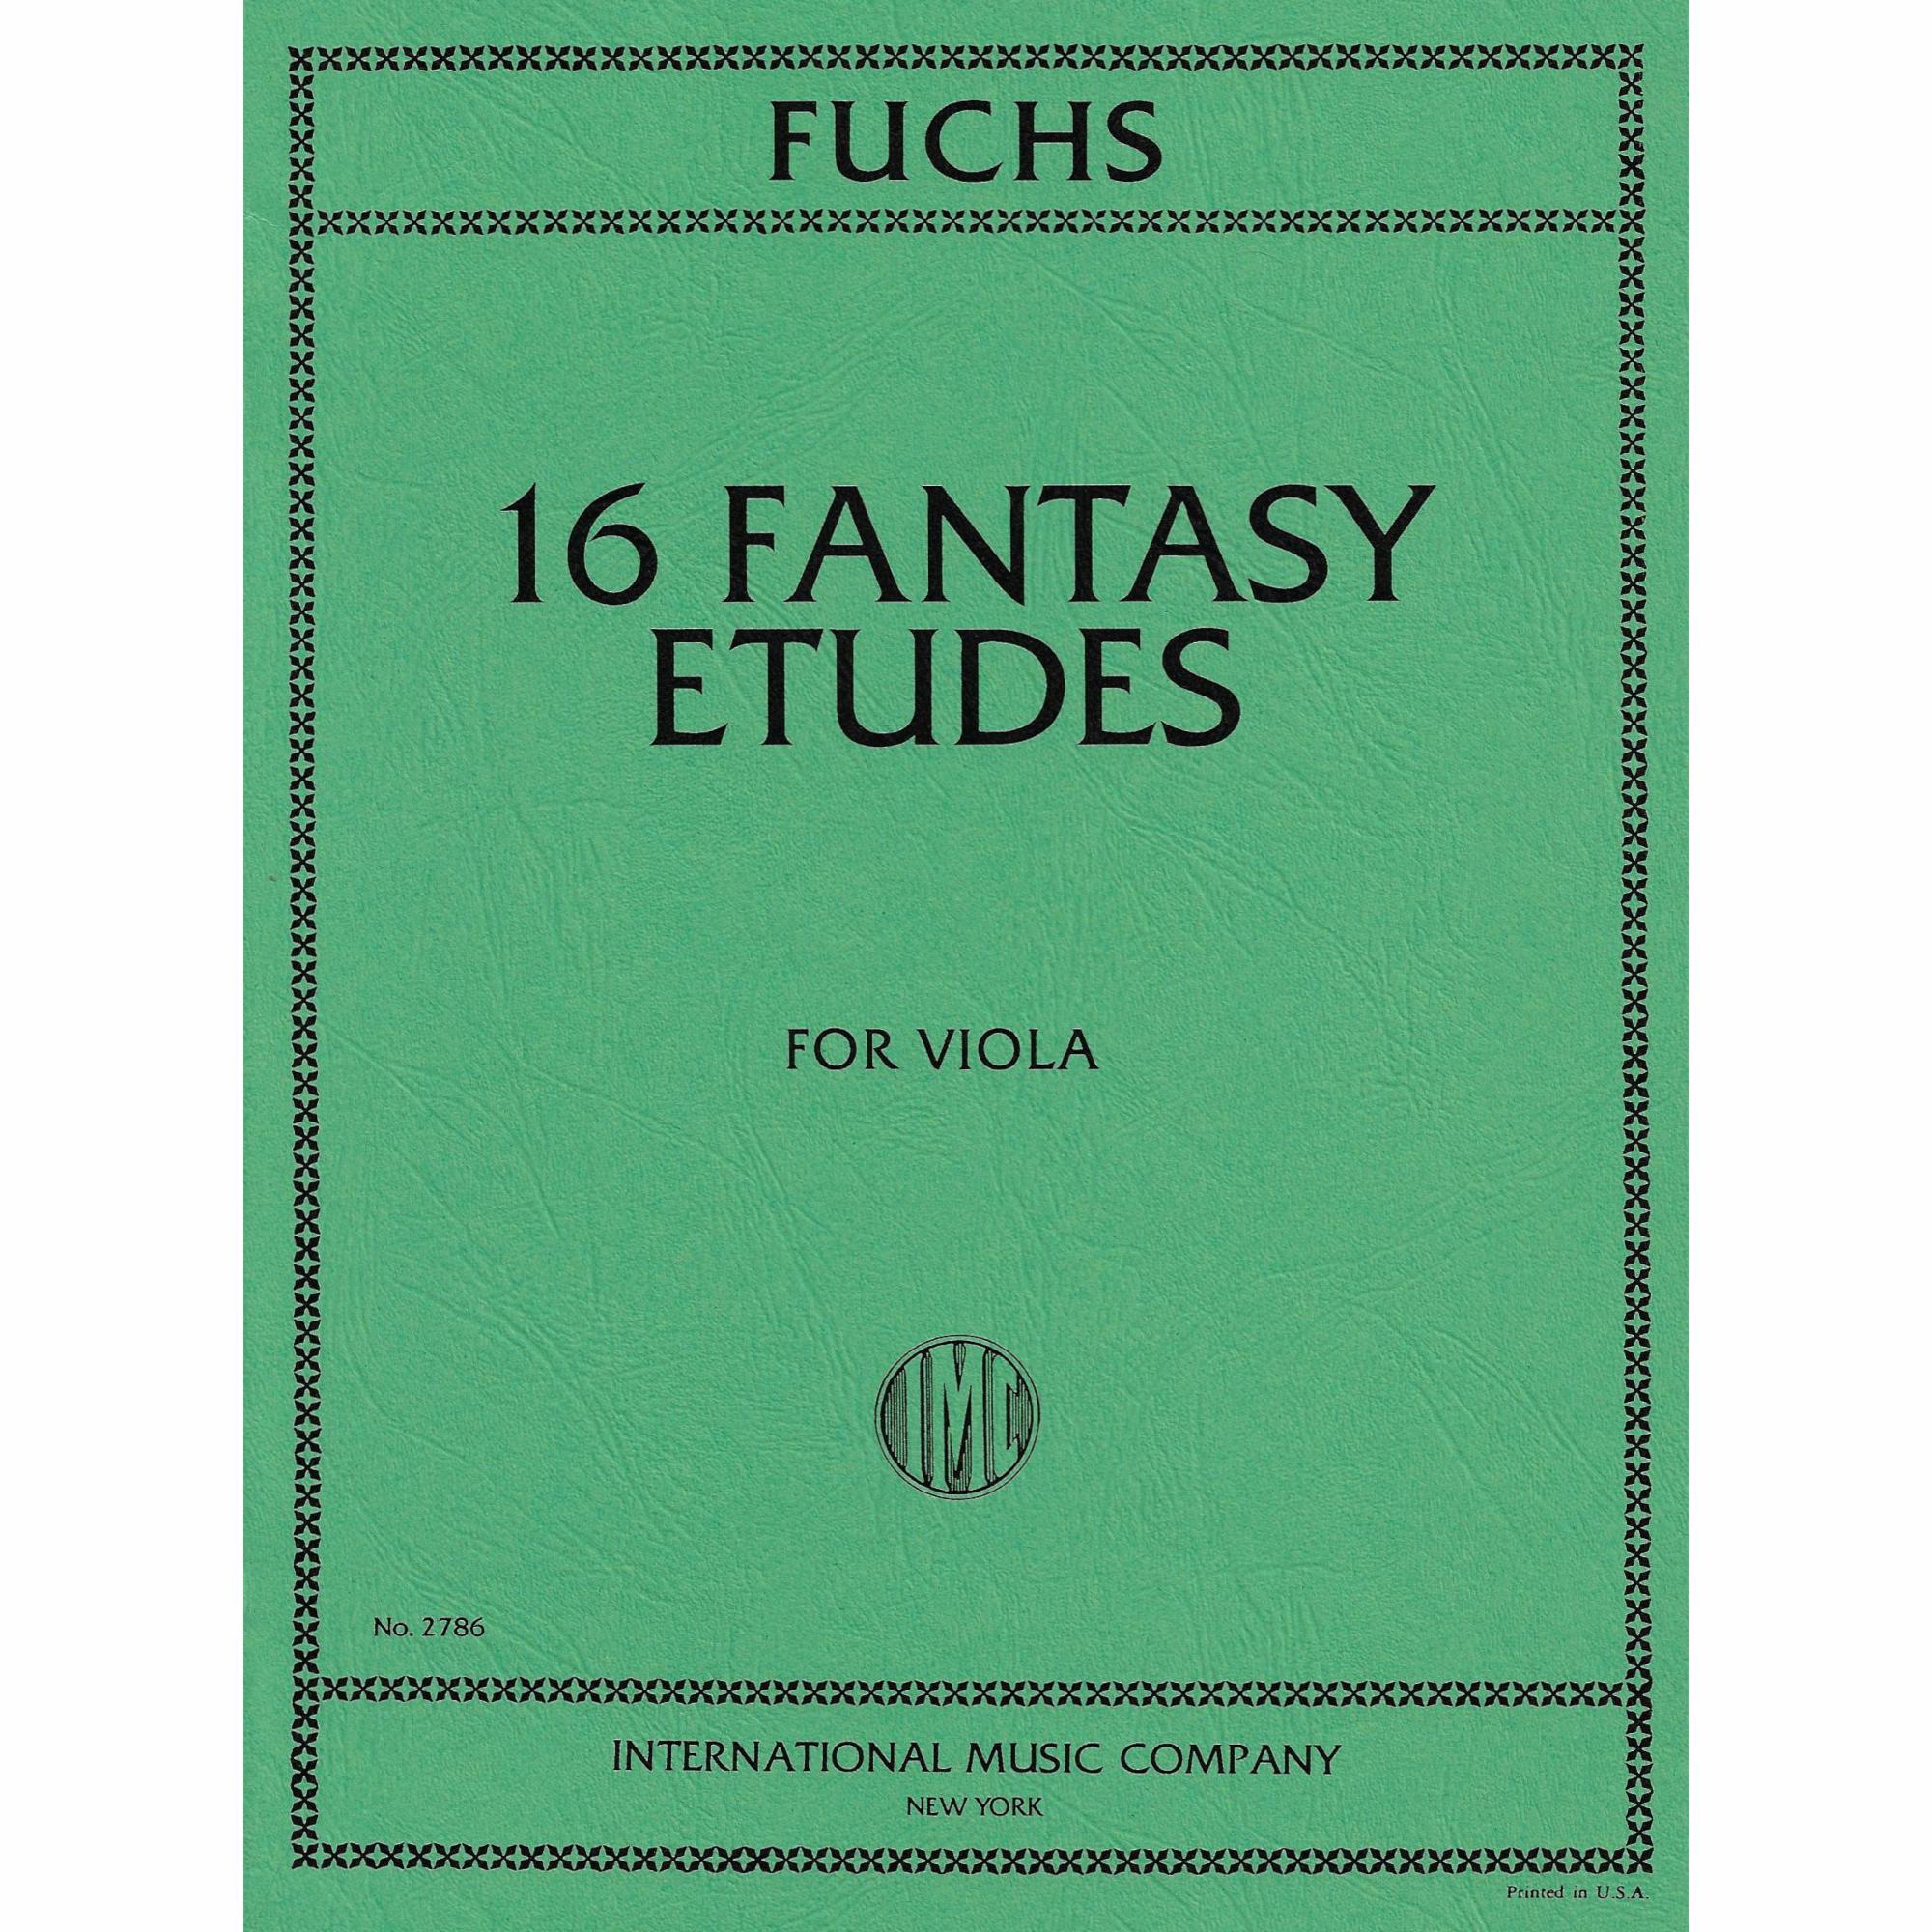 Fuchs -- 16 Fantasy Etudes for Viola